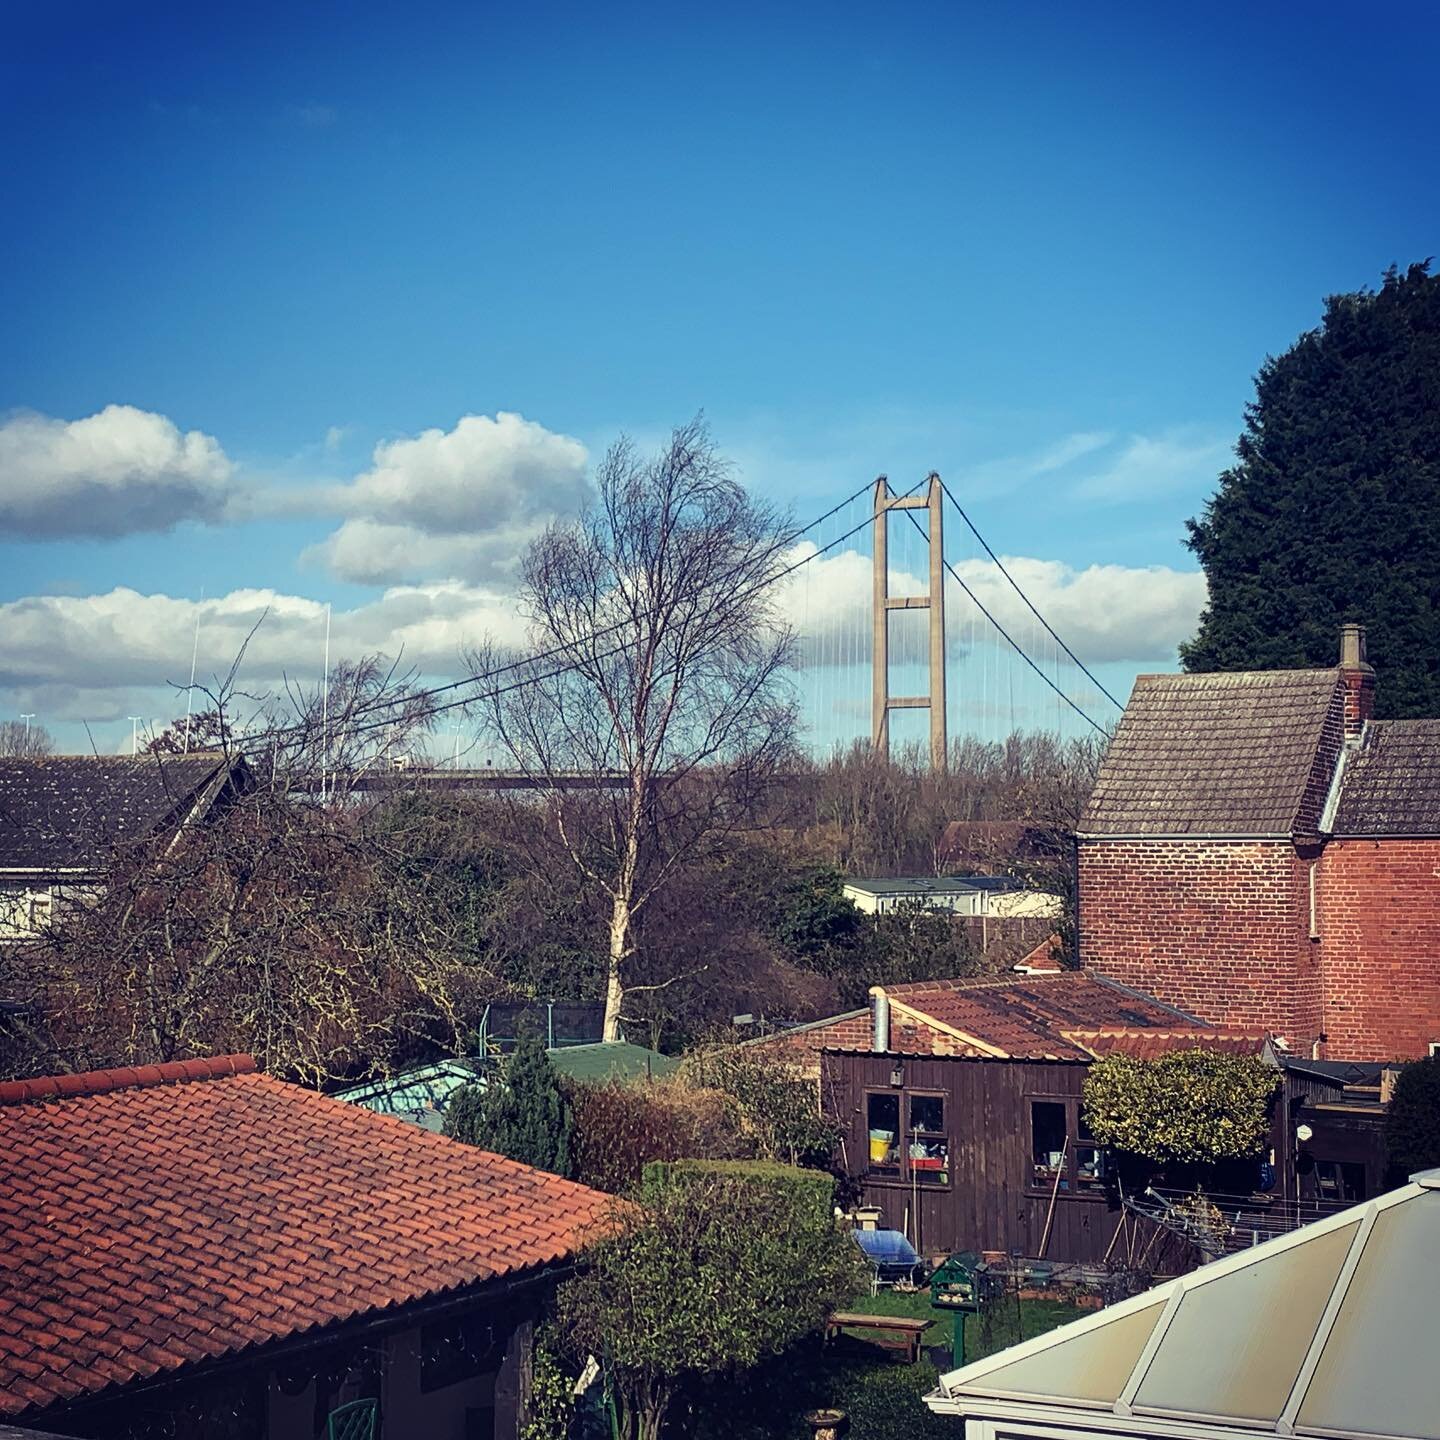 Rooftop view

#humberbridge #barton